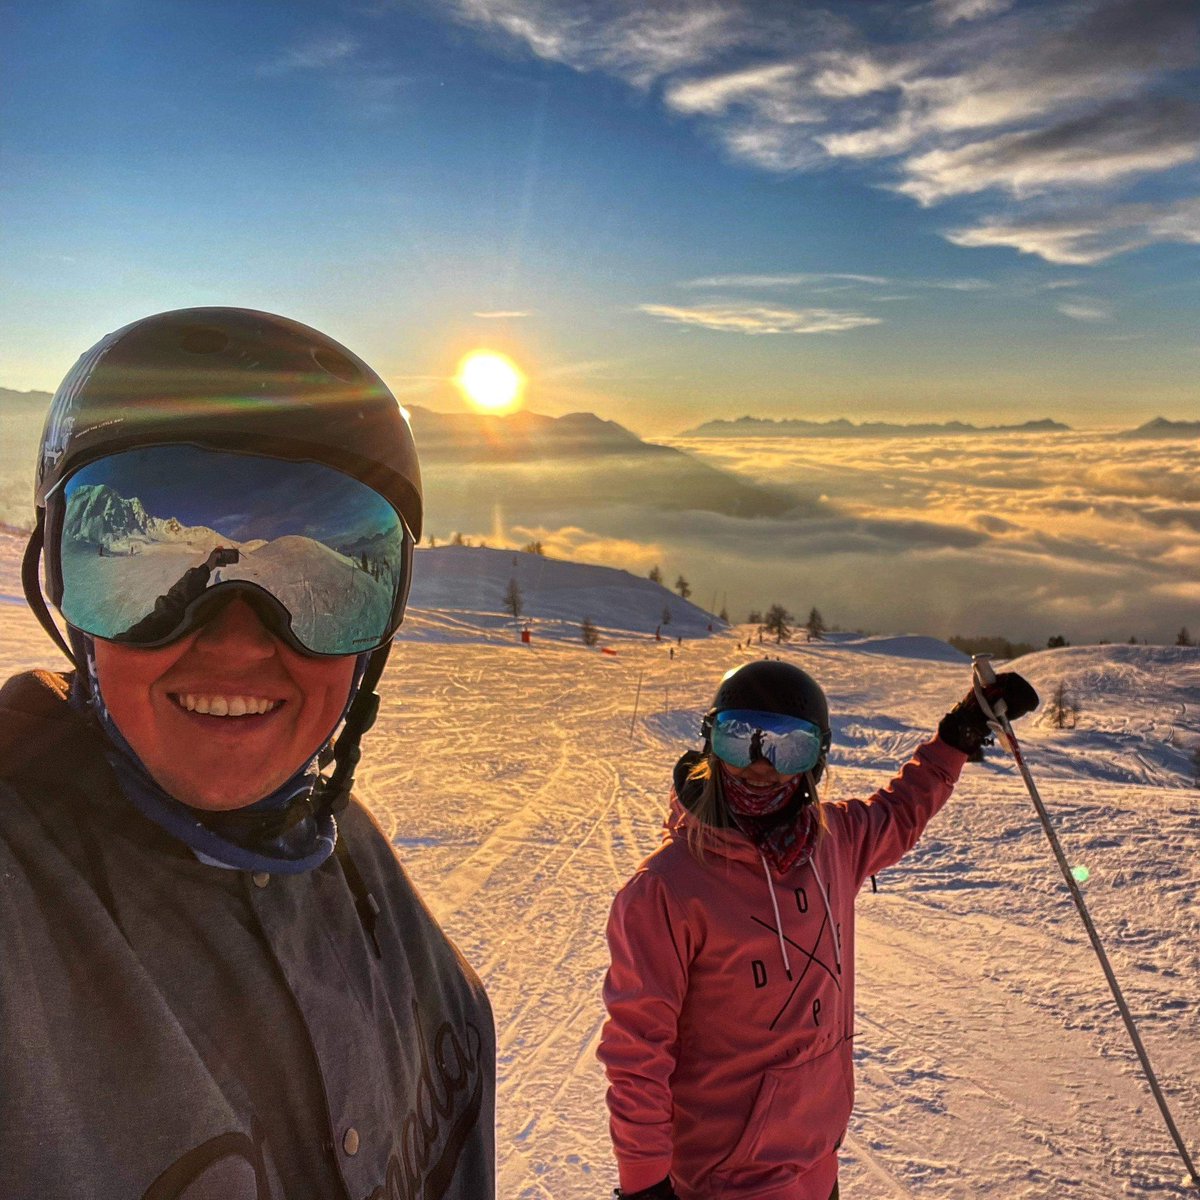 Thé best day off ever! #valdisere 
#mullit #apresski #powderday #bluebirdday 
#skiholiday #frenchalps #tignes #winterwonderland 
#snowboarding #skiing #contactus #mountainlife